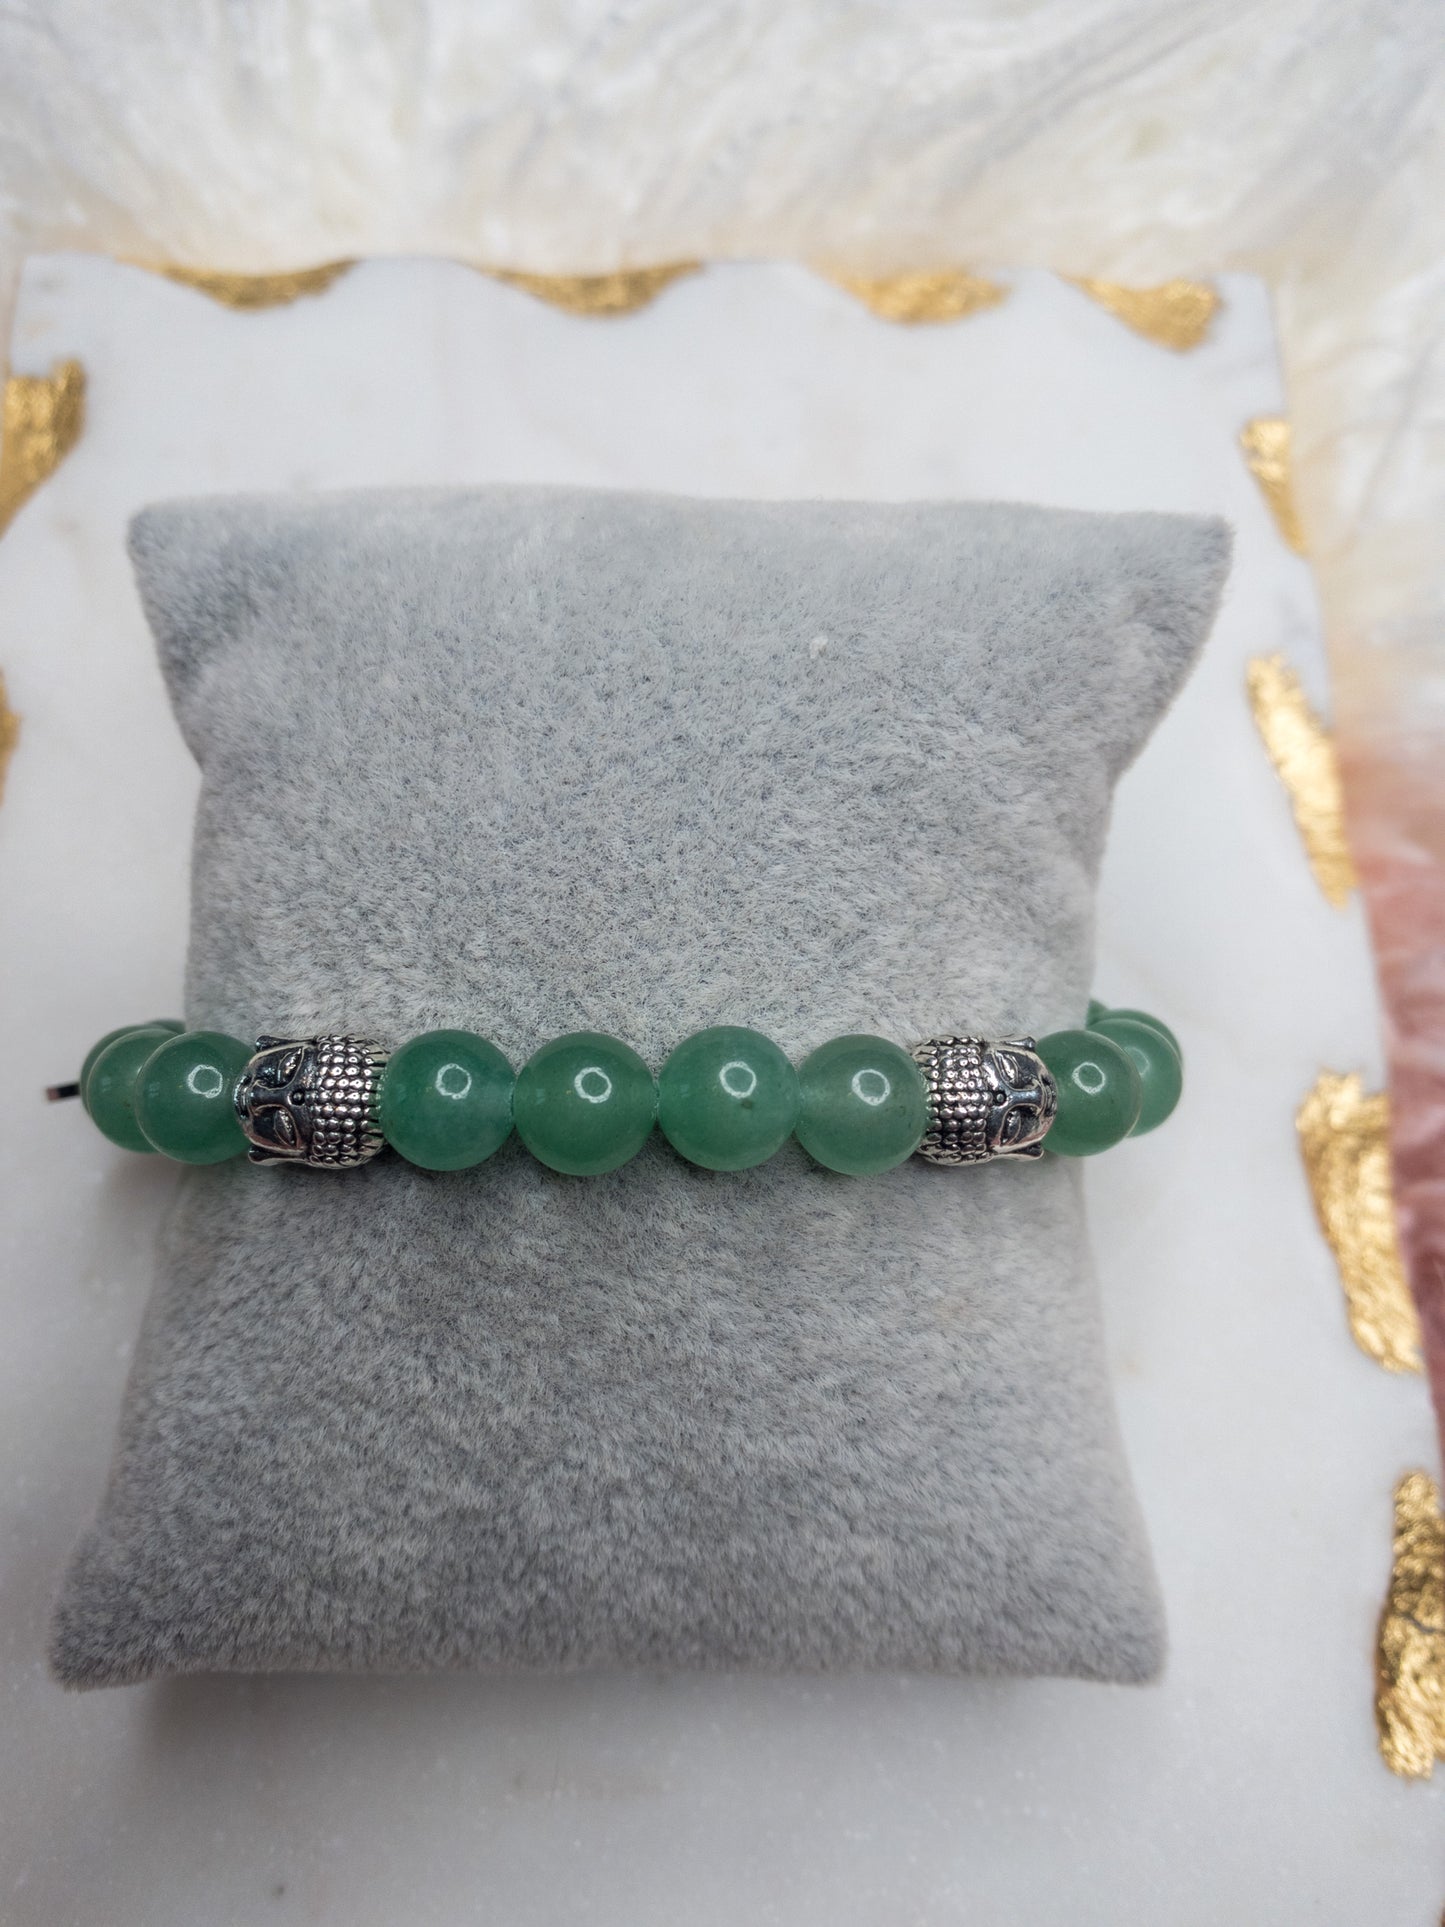 Green Aventurine Buddha Crystal Bracelet